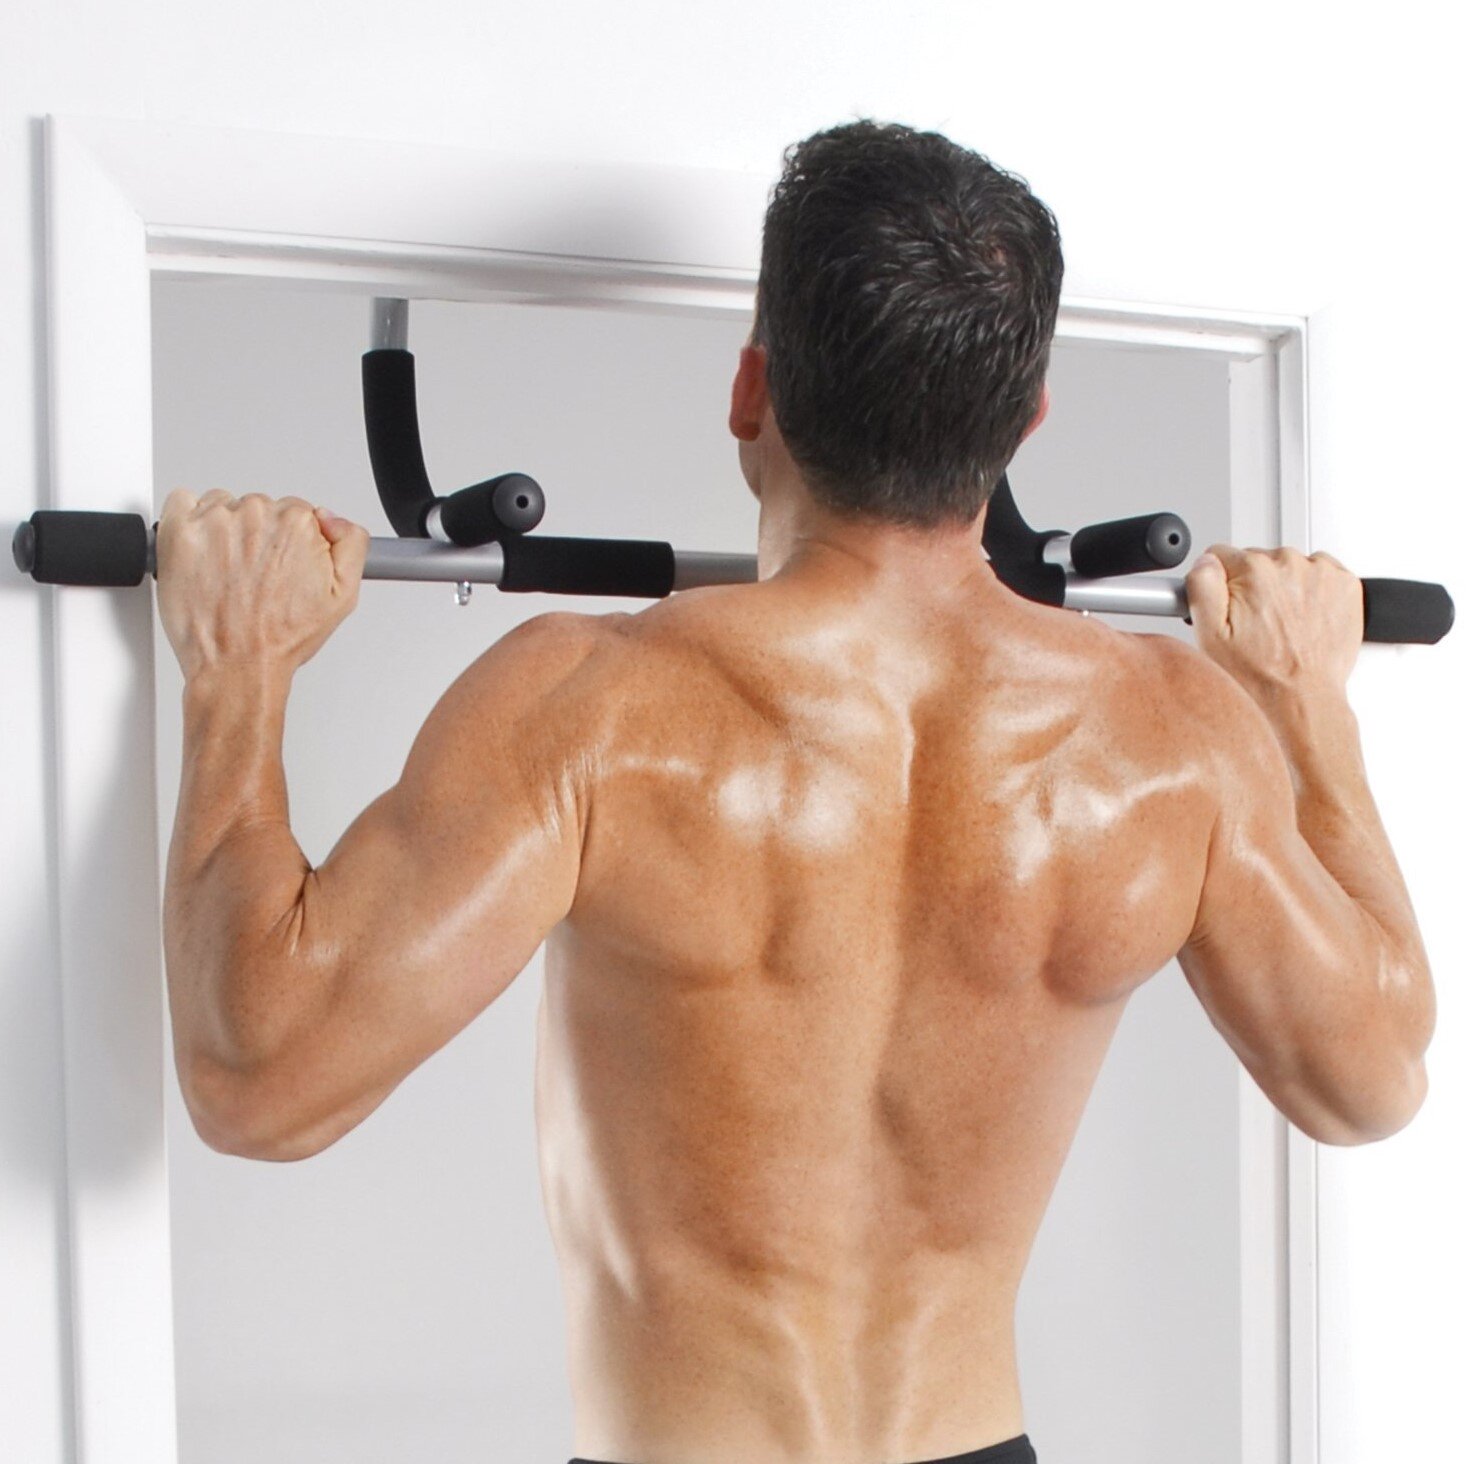 Man using iron gym workout bar to do pull-ups and push-ups